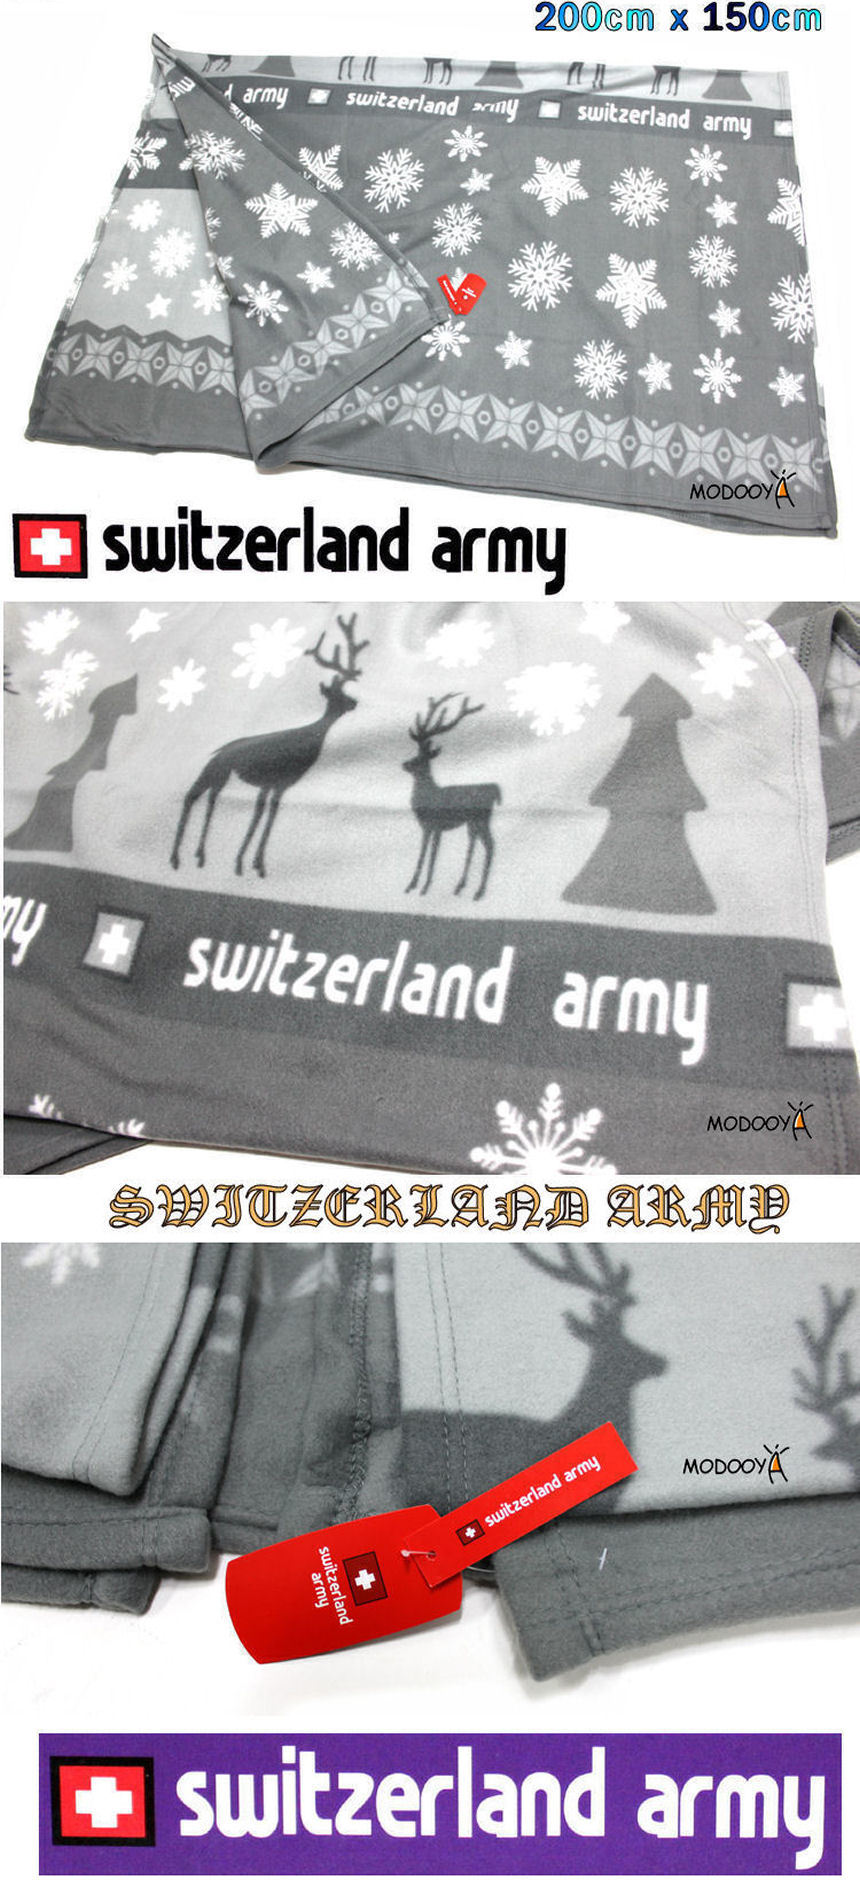 2switzerland_army_dubleblanke.jpg